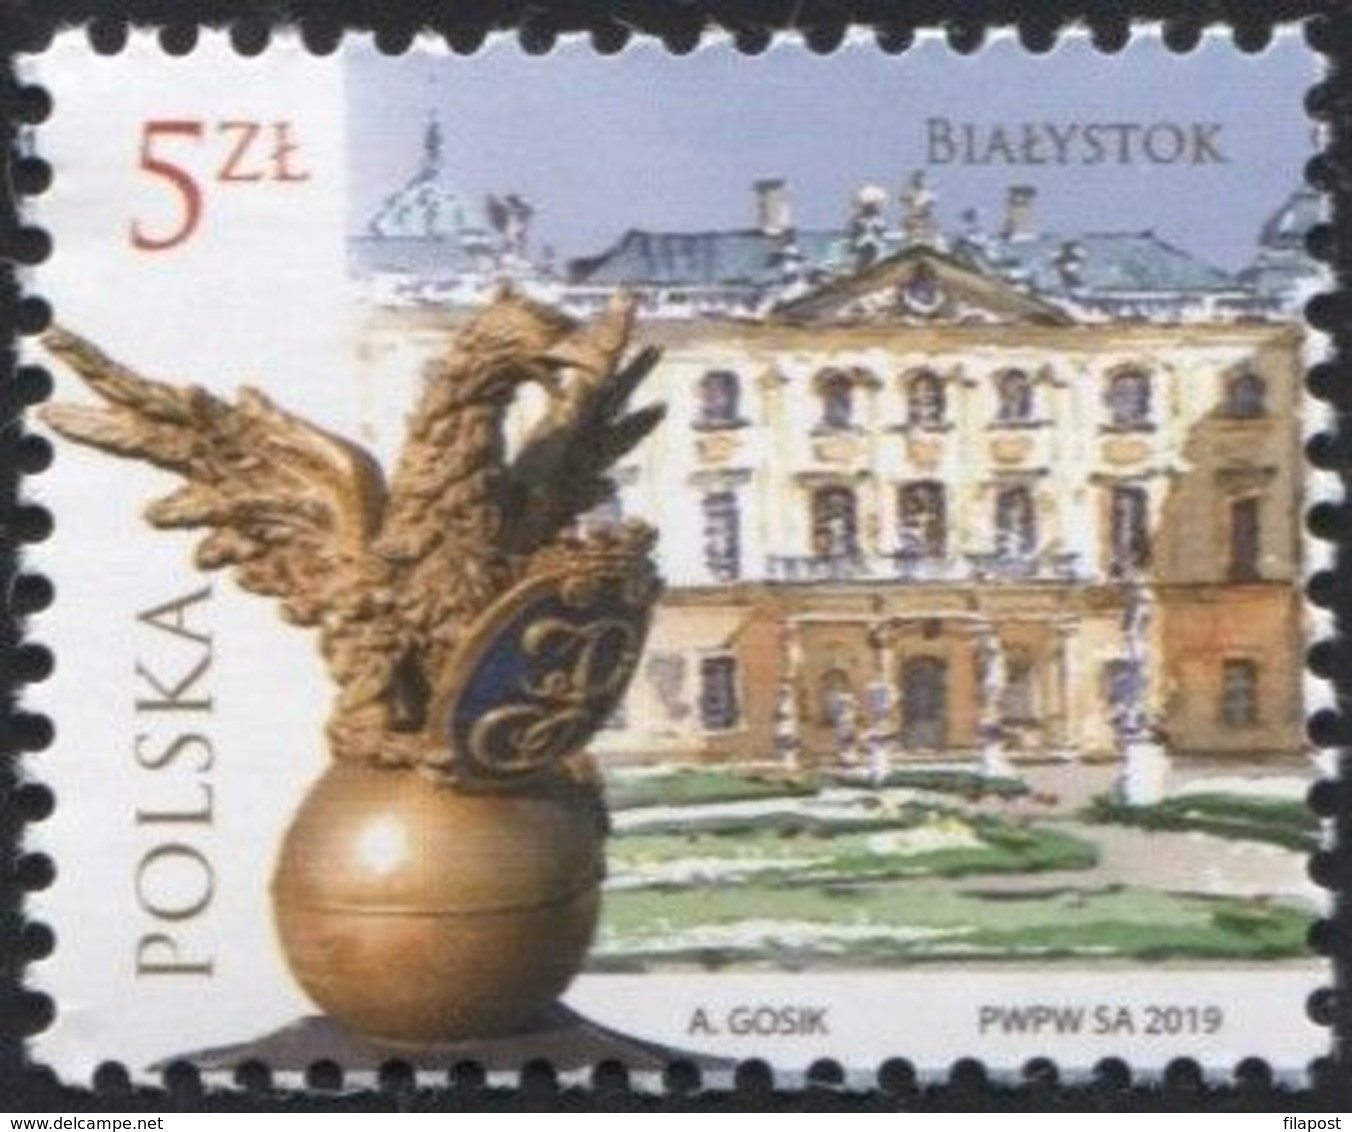 POLAND 2019 Fi 4943 Polish Cities - Bialystok, Griffin, Branicki Palace, Building, Architecture MNH** - Unused Stamps